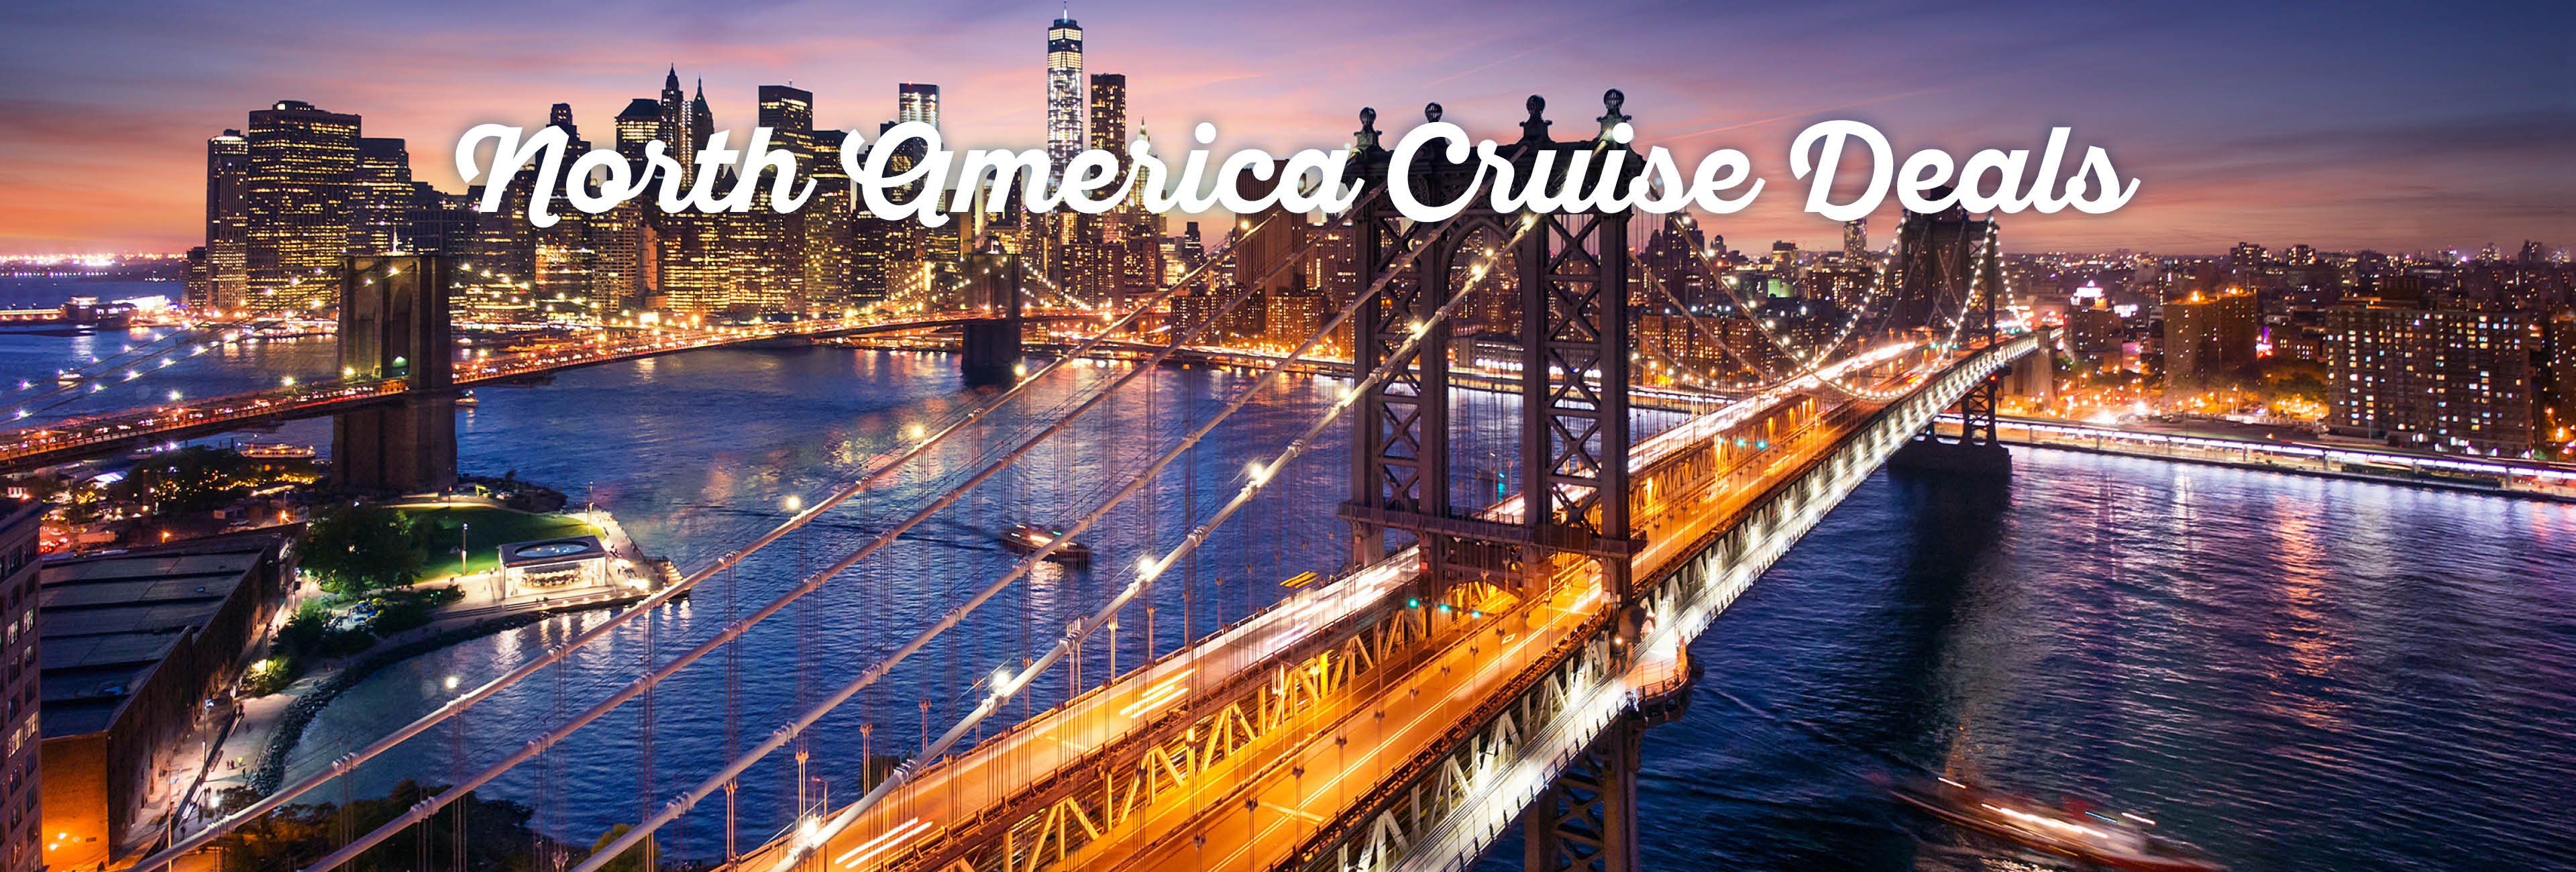 north-america-cruise-deals1.jpg